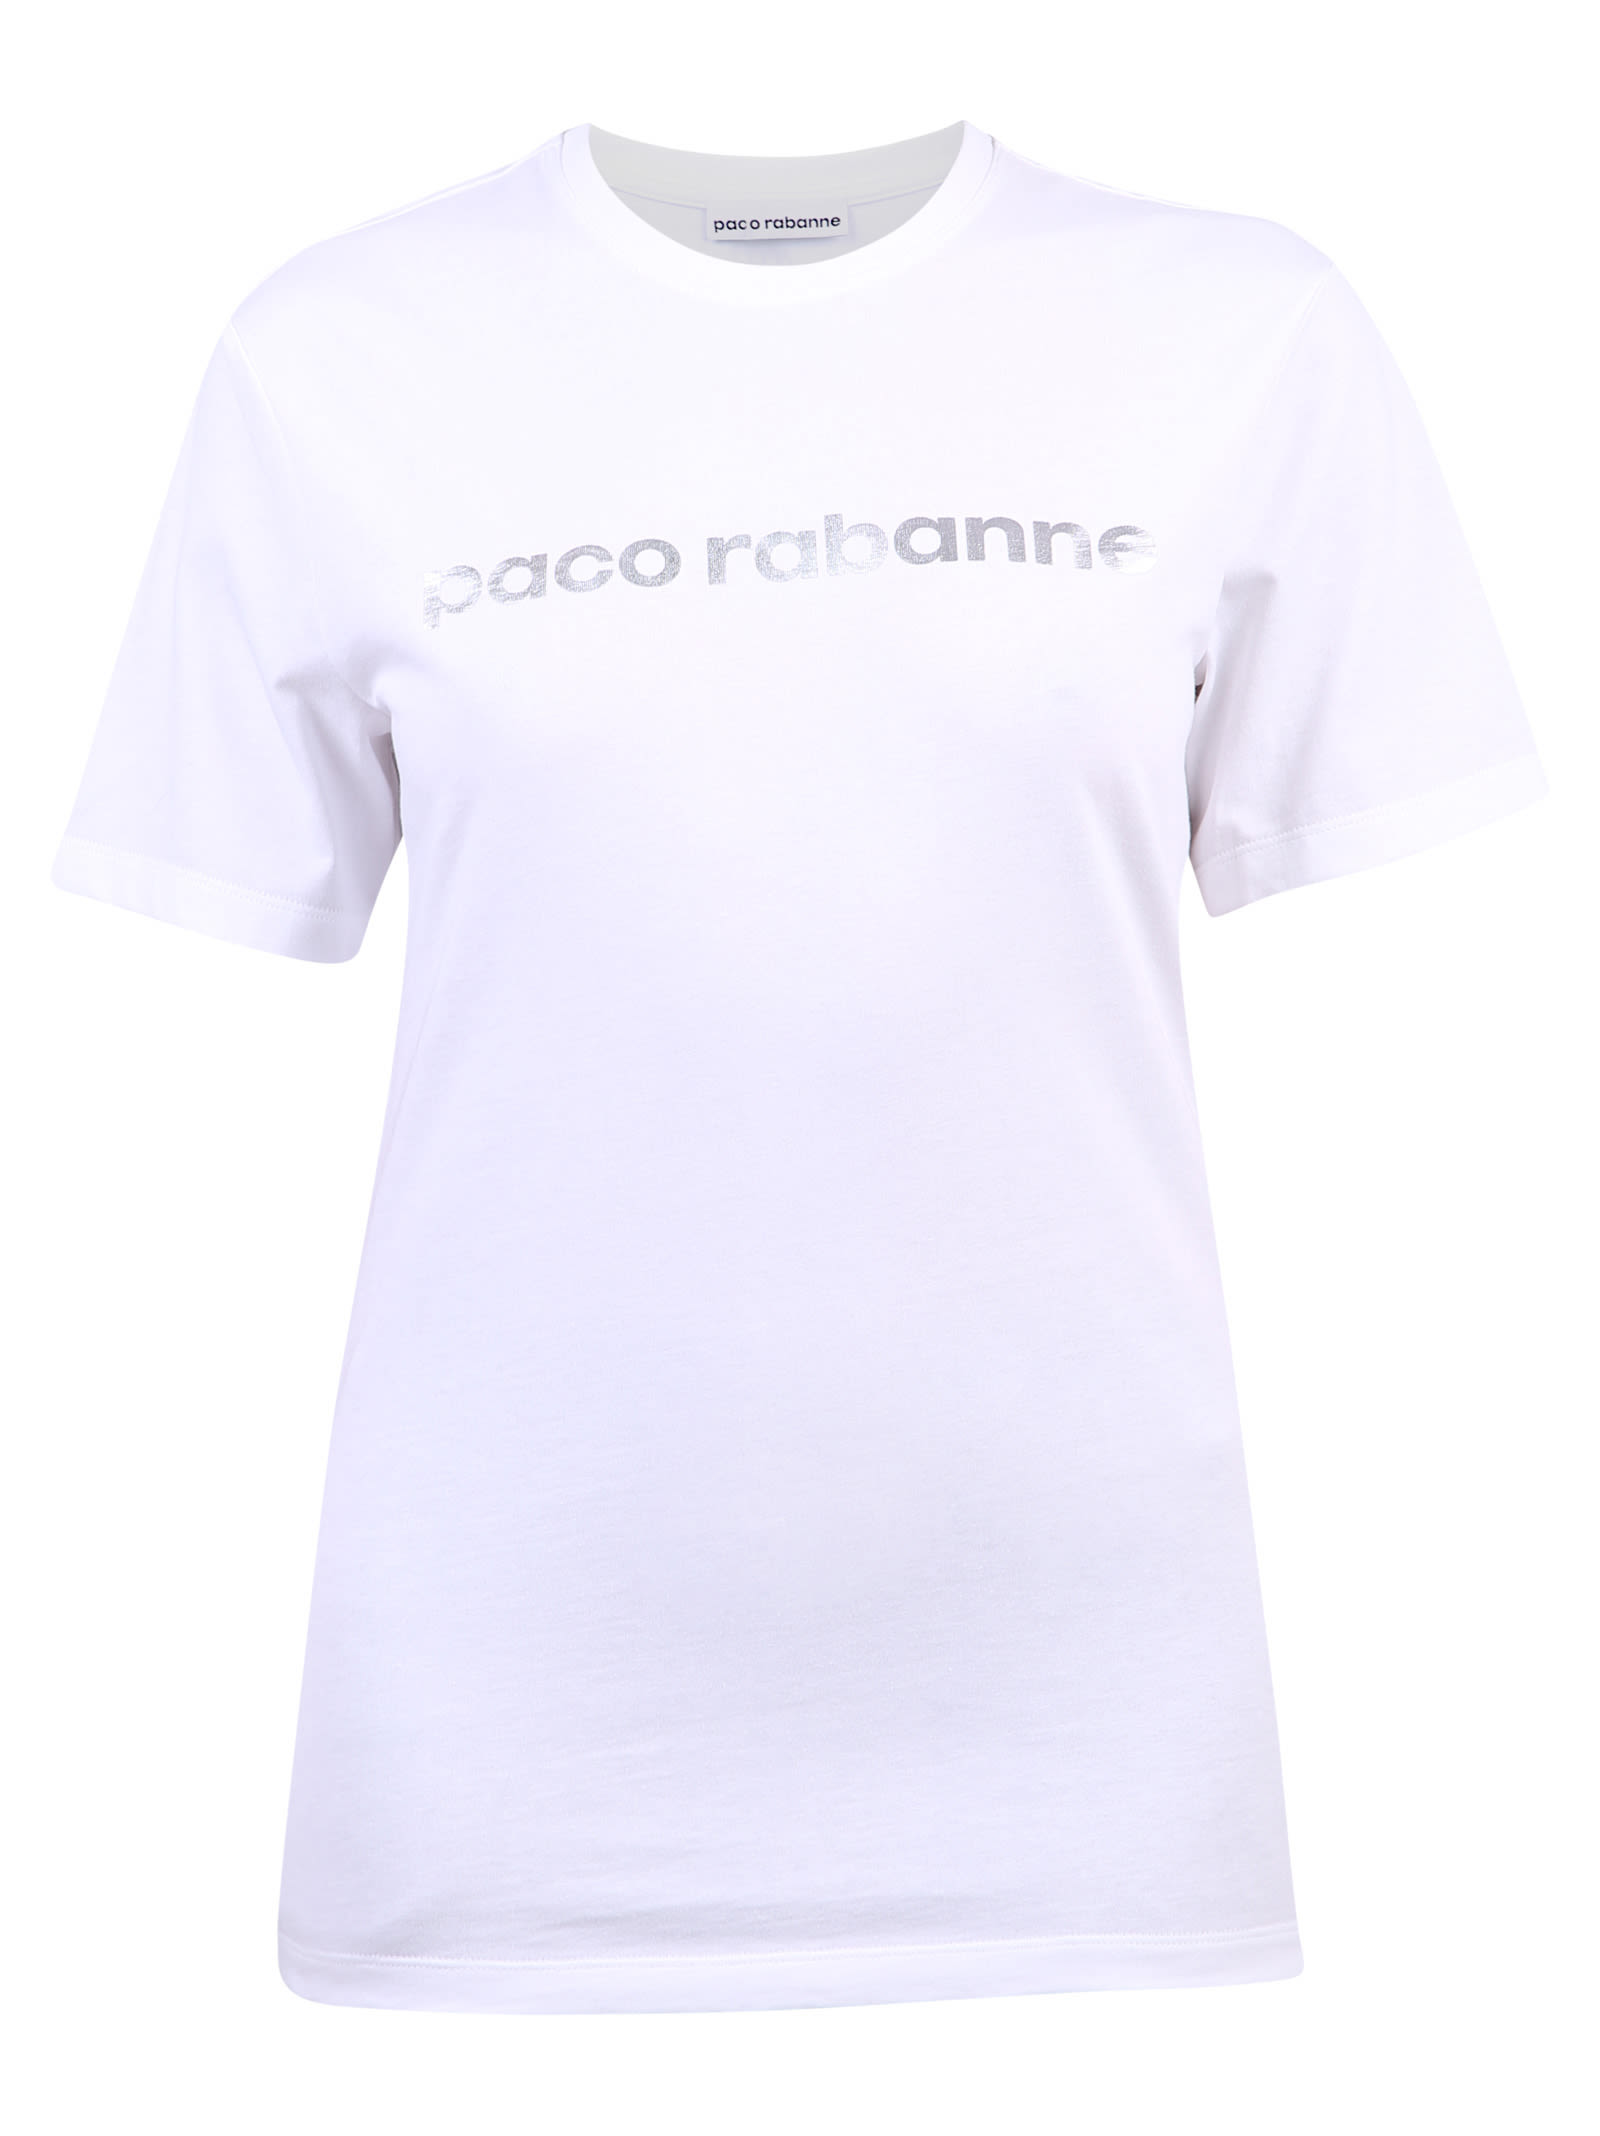 Paco Rabanne Branded T-shirt